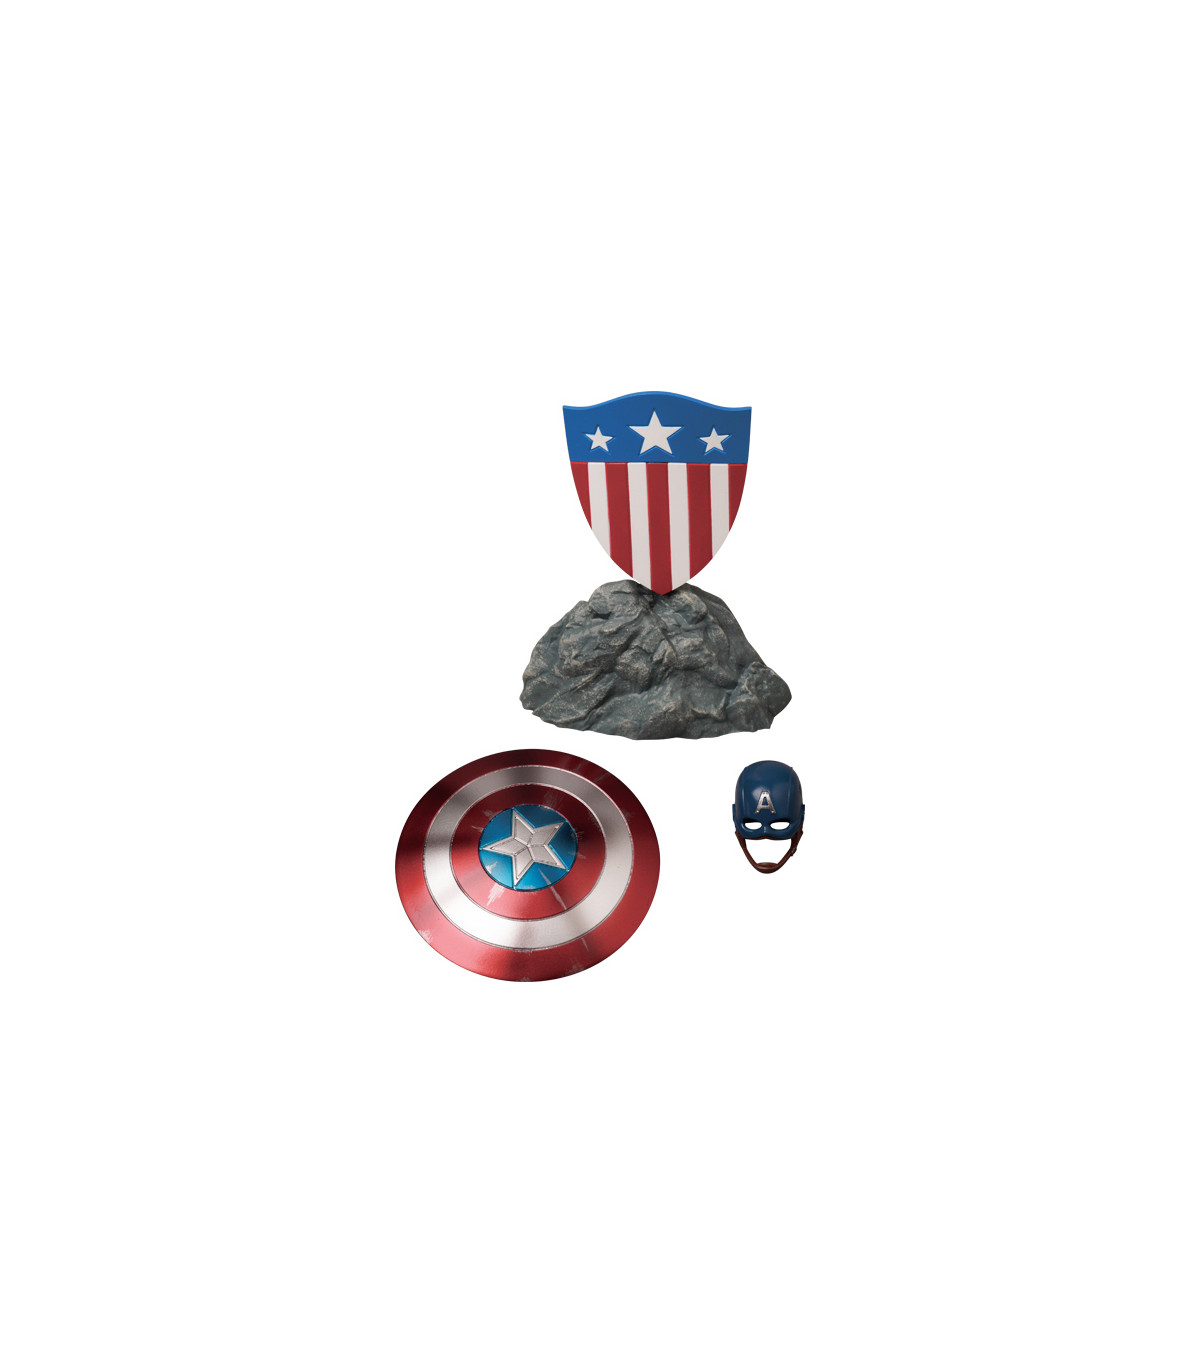 Shopone Alarm Stopper Captain America Design Null Insert Seat